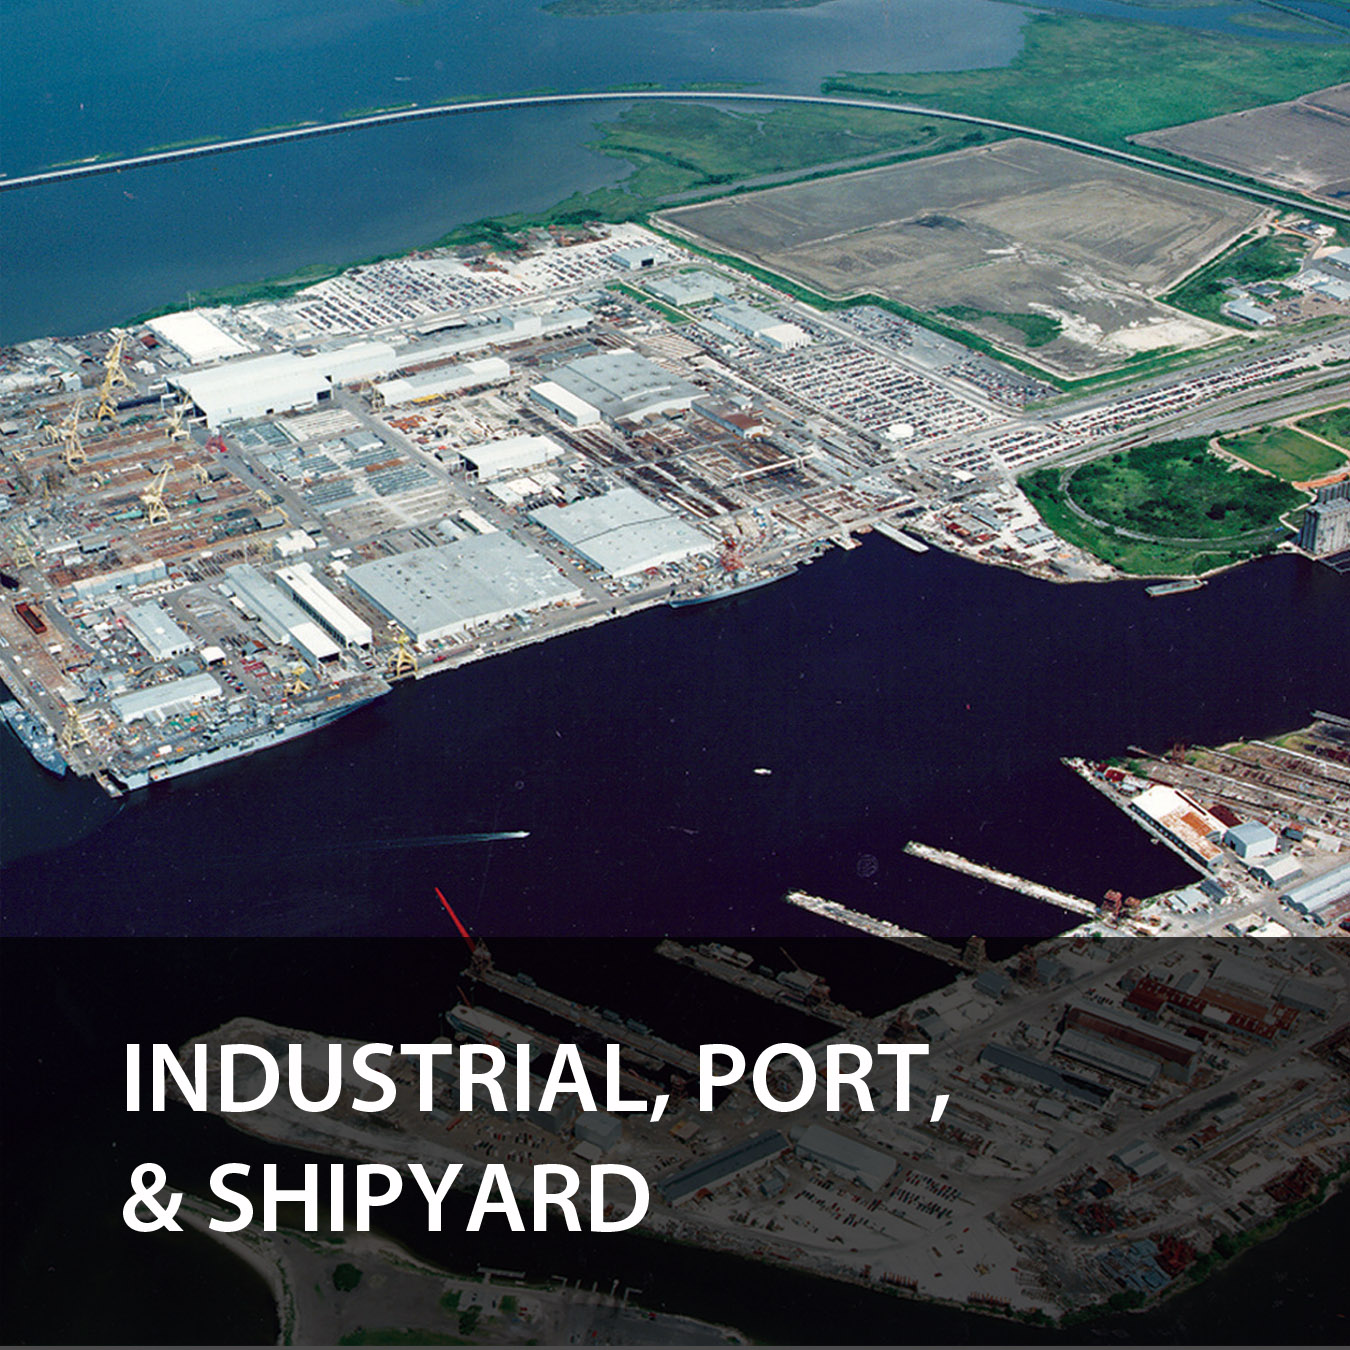 Industrial, Port, & Shipyard